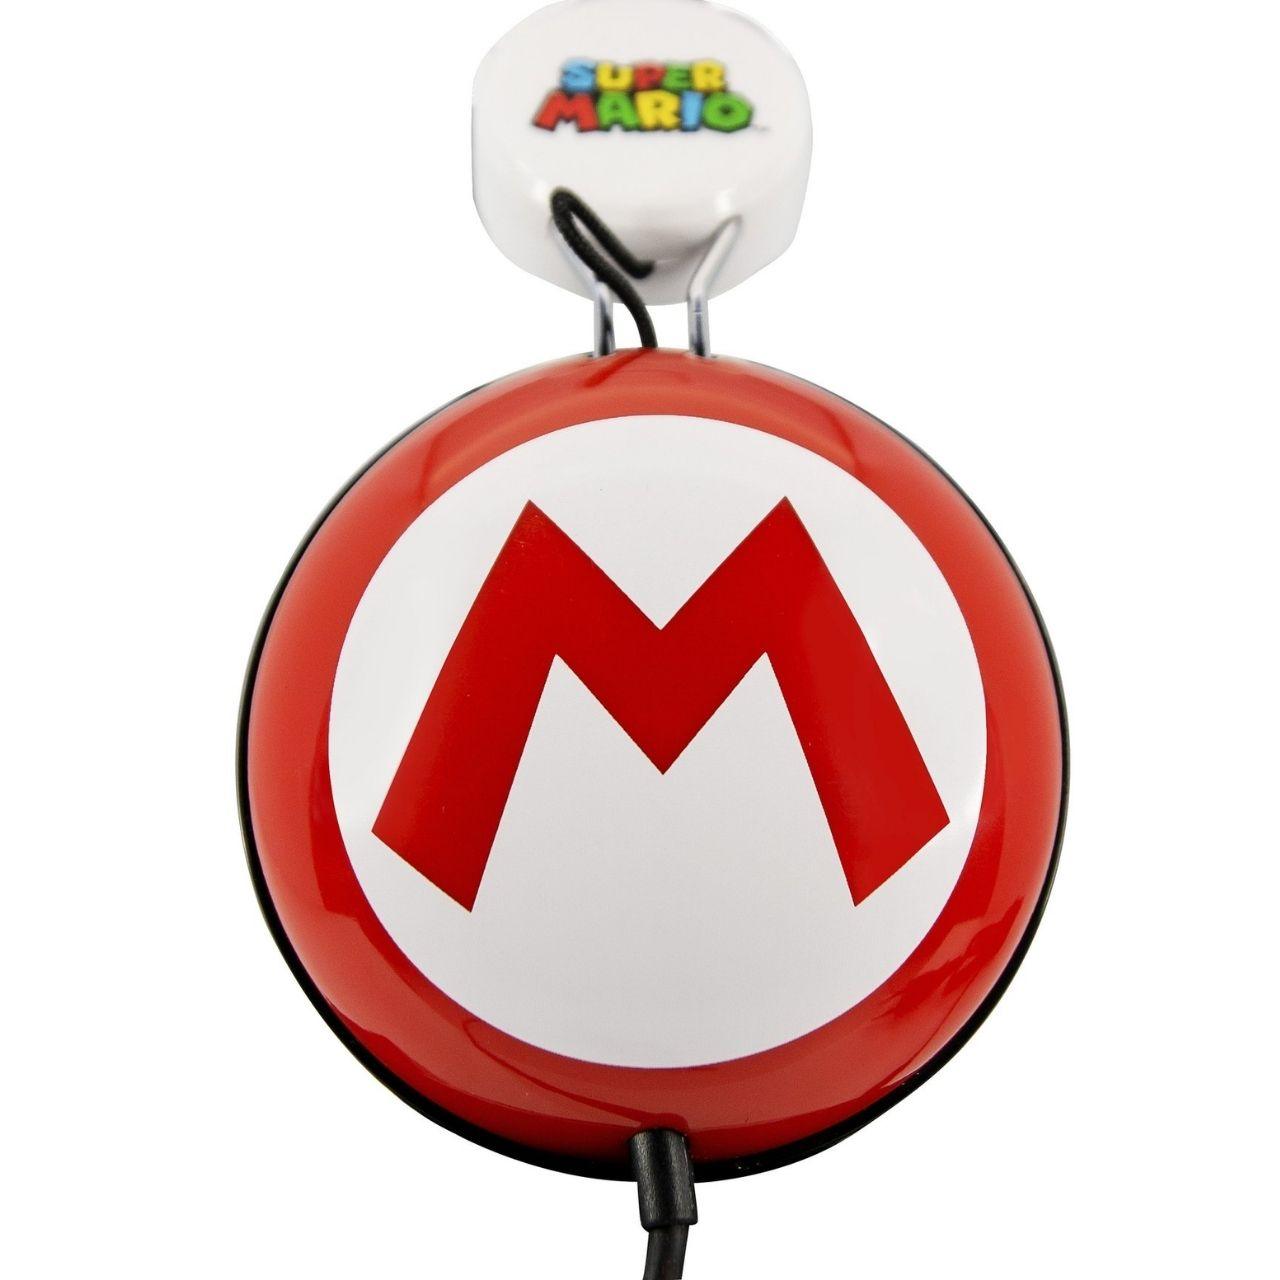 Nintendo Super Mario Headphones - childrensheadphones.co.uk